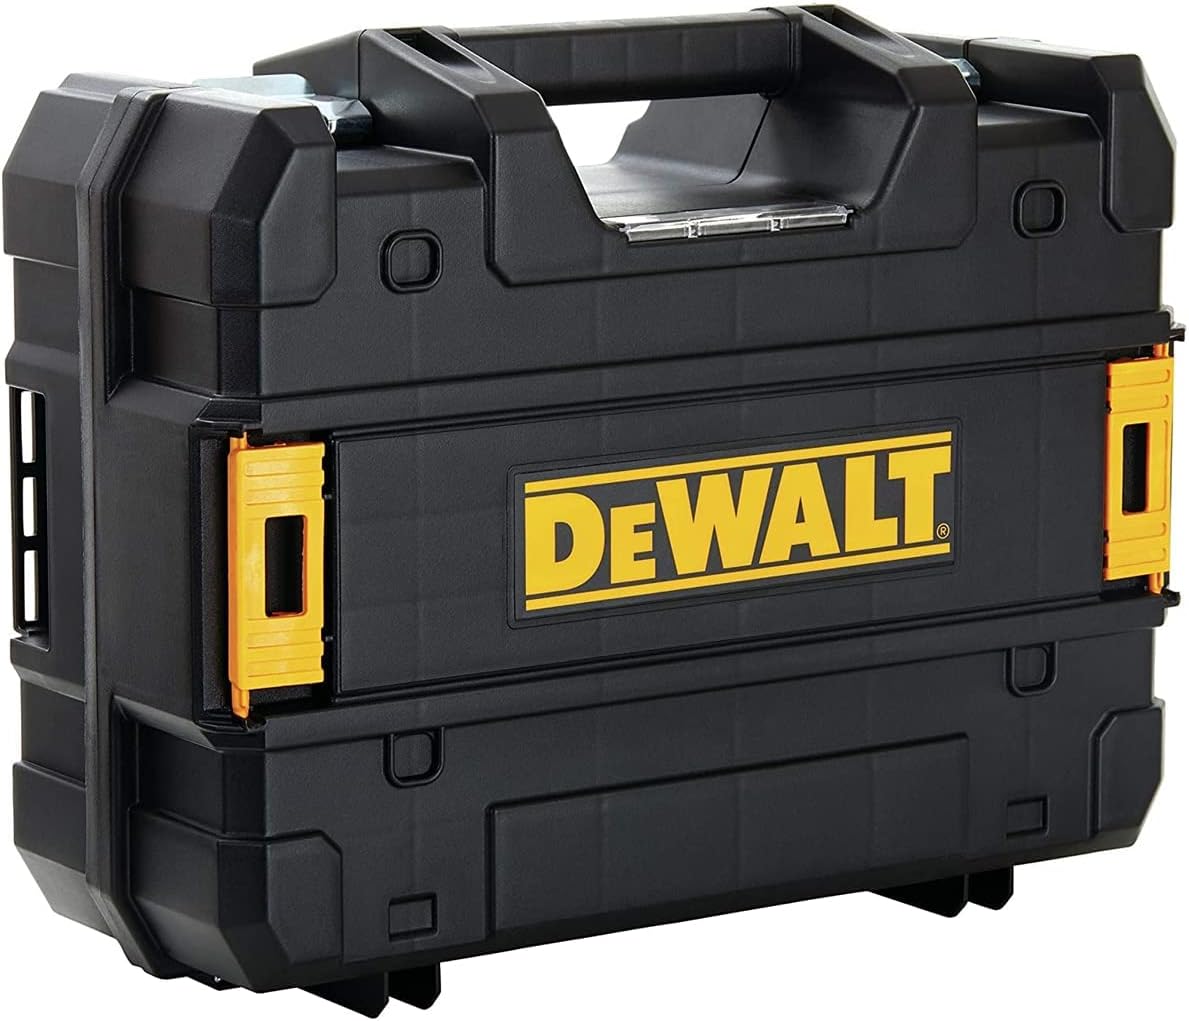 Dewalt DCF887NT 18V XR Li-Ion Brushless Impact Driver Body with Tstak Carry Case